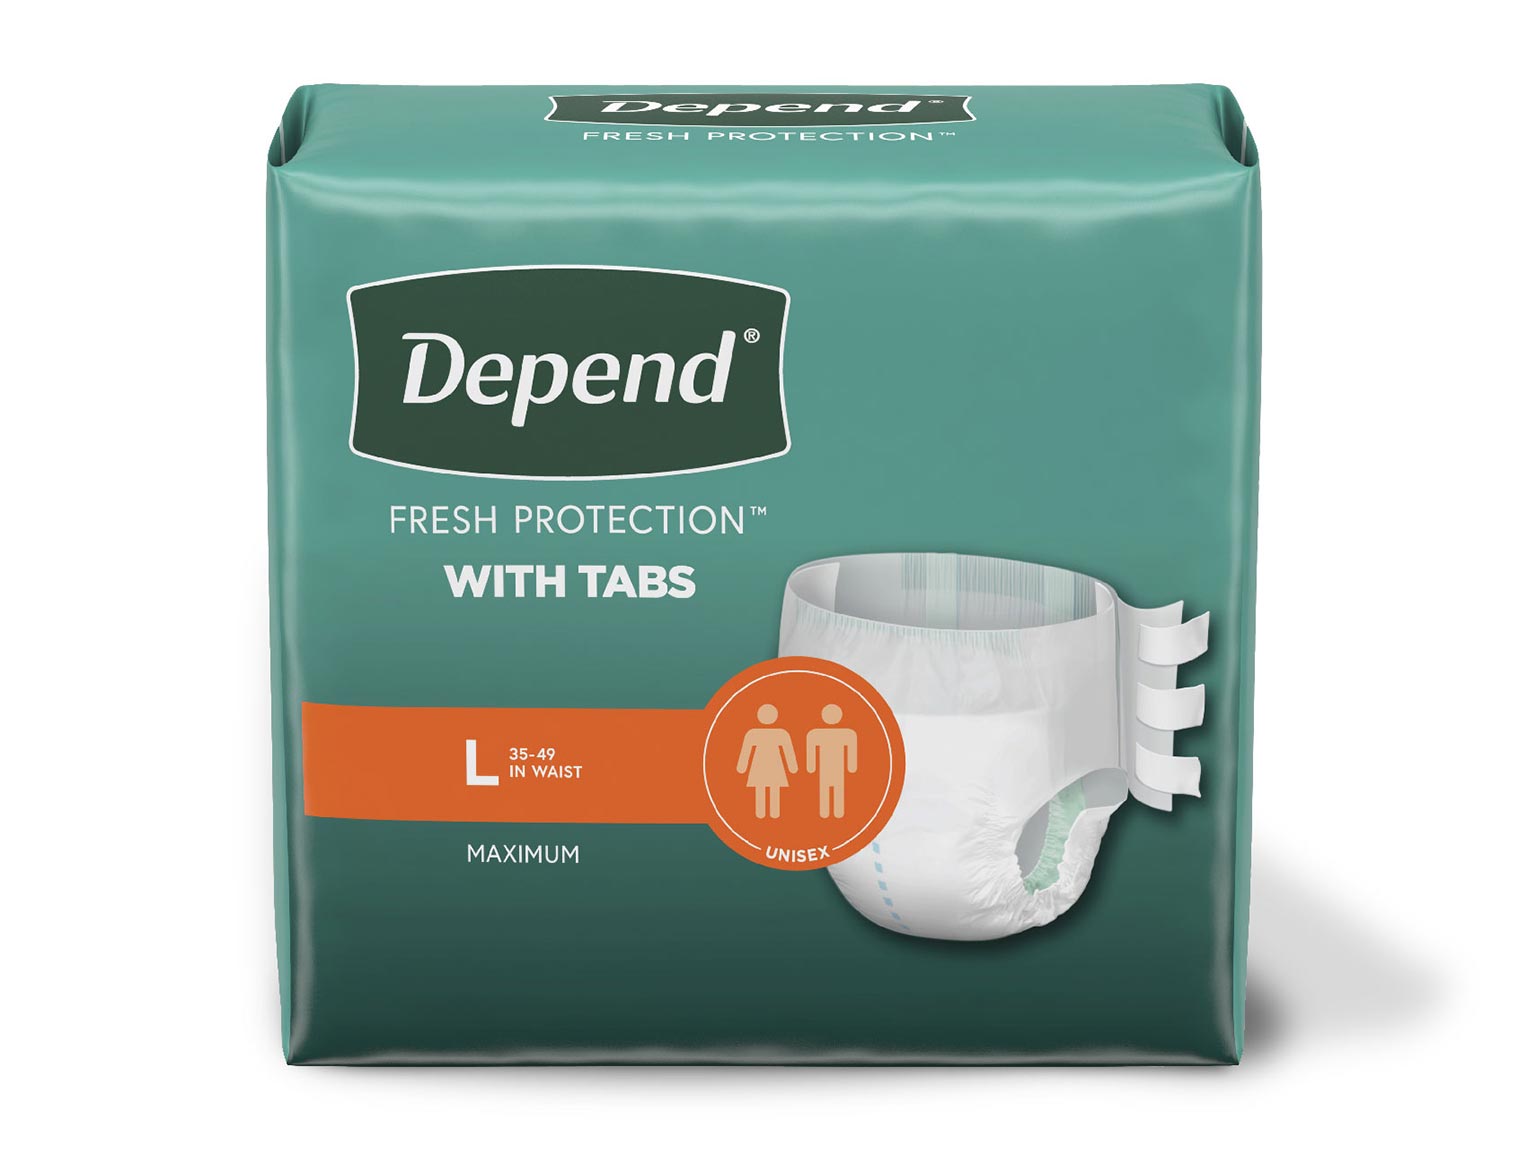 Depend® Night Defense® Underwear for Men- Overnight (S-M/L/XL)